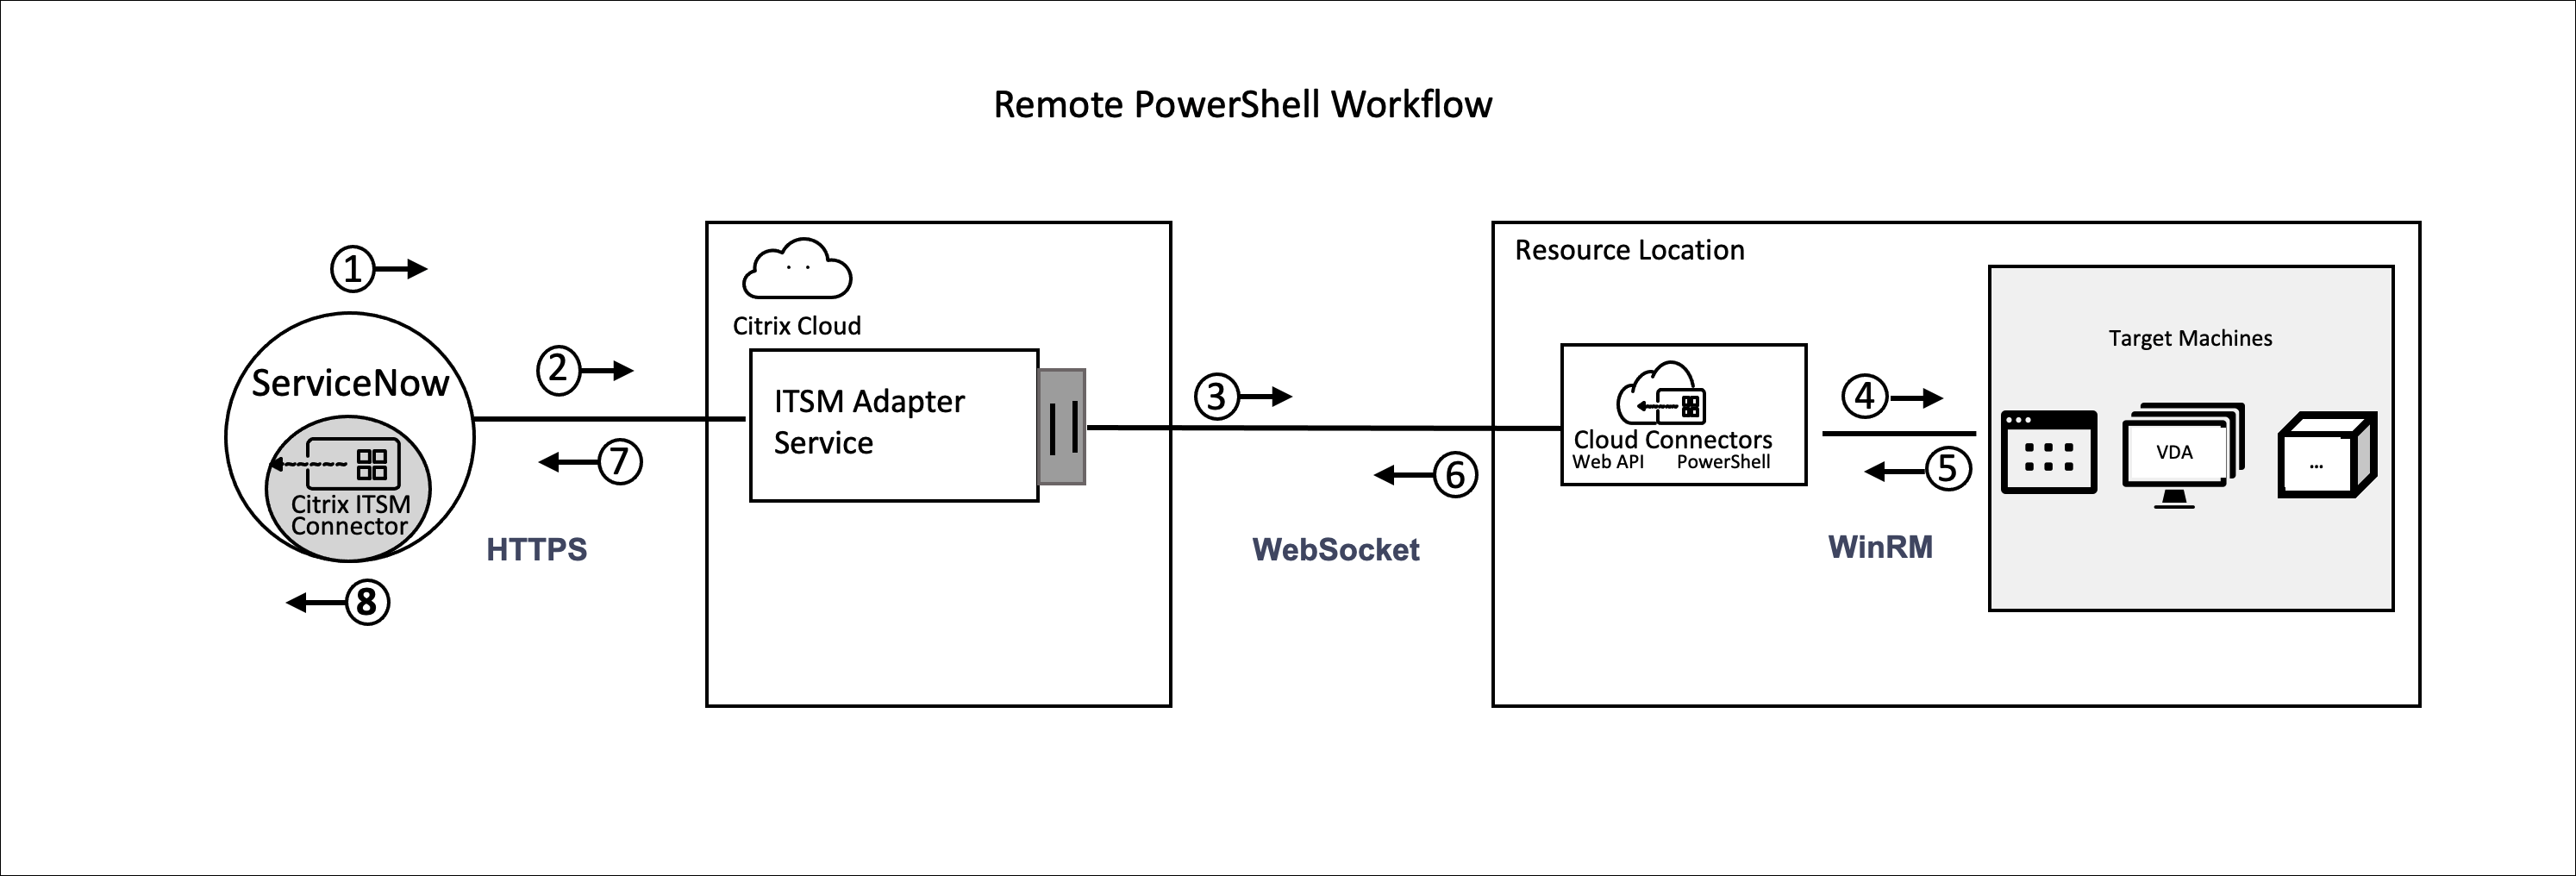 Remote PowerShell workflow